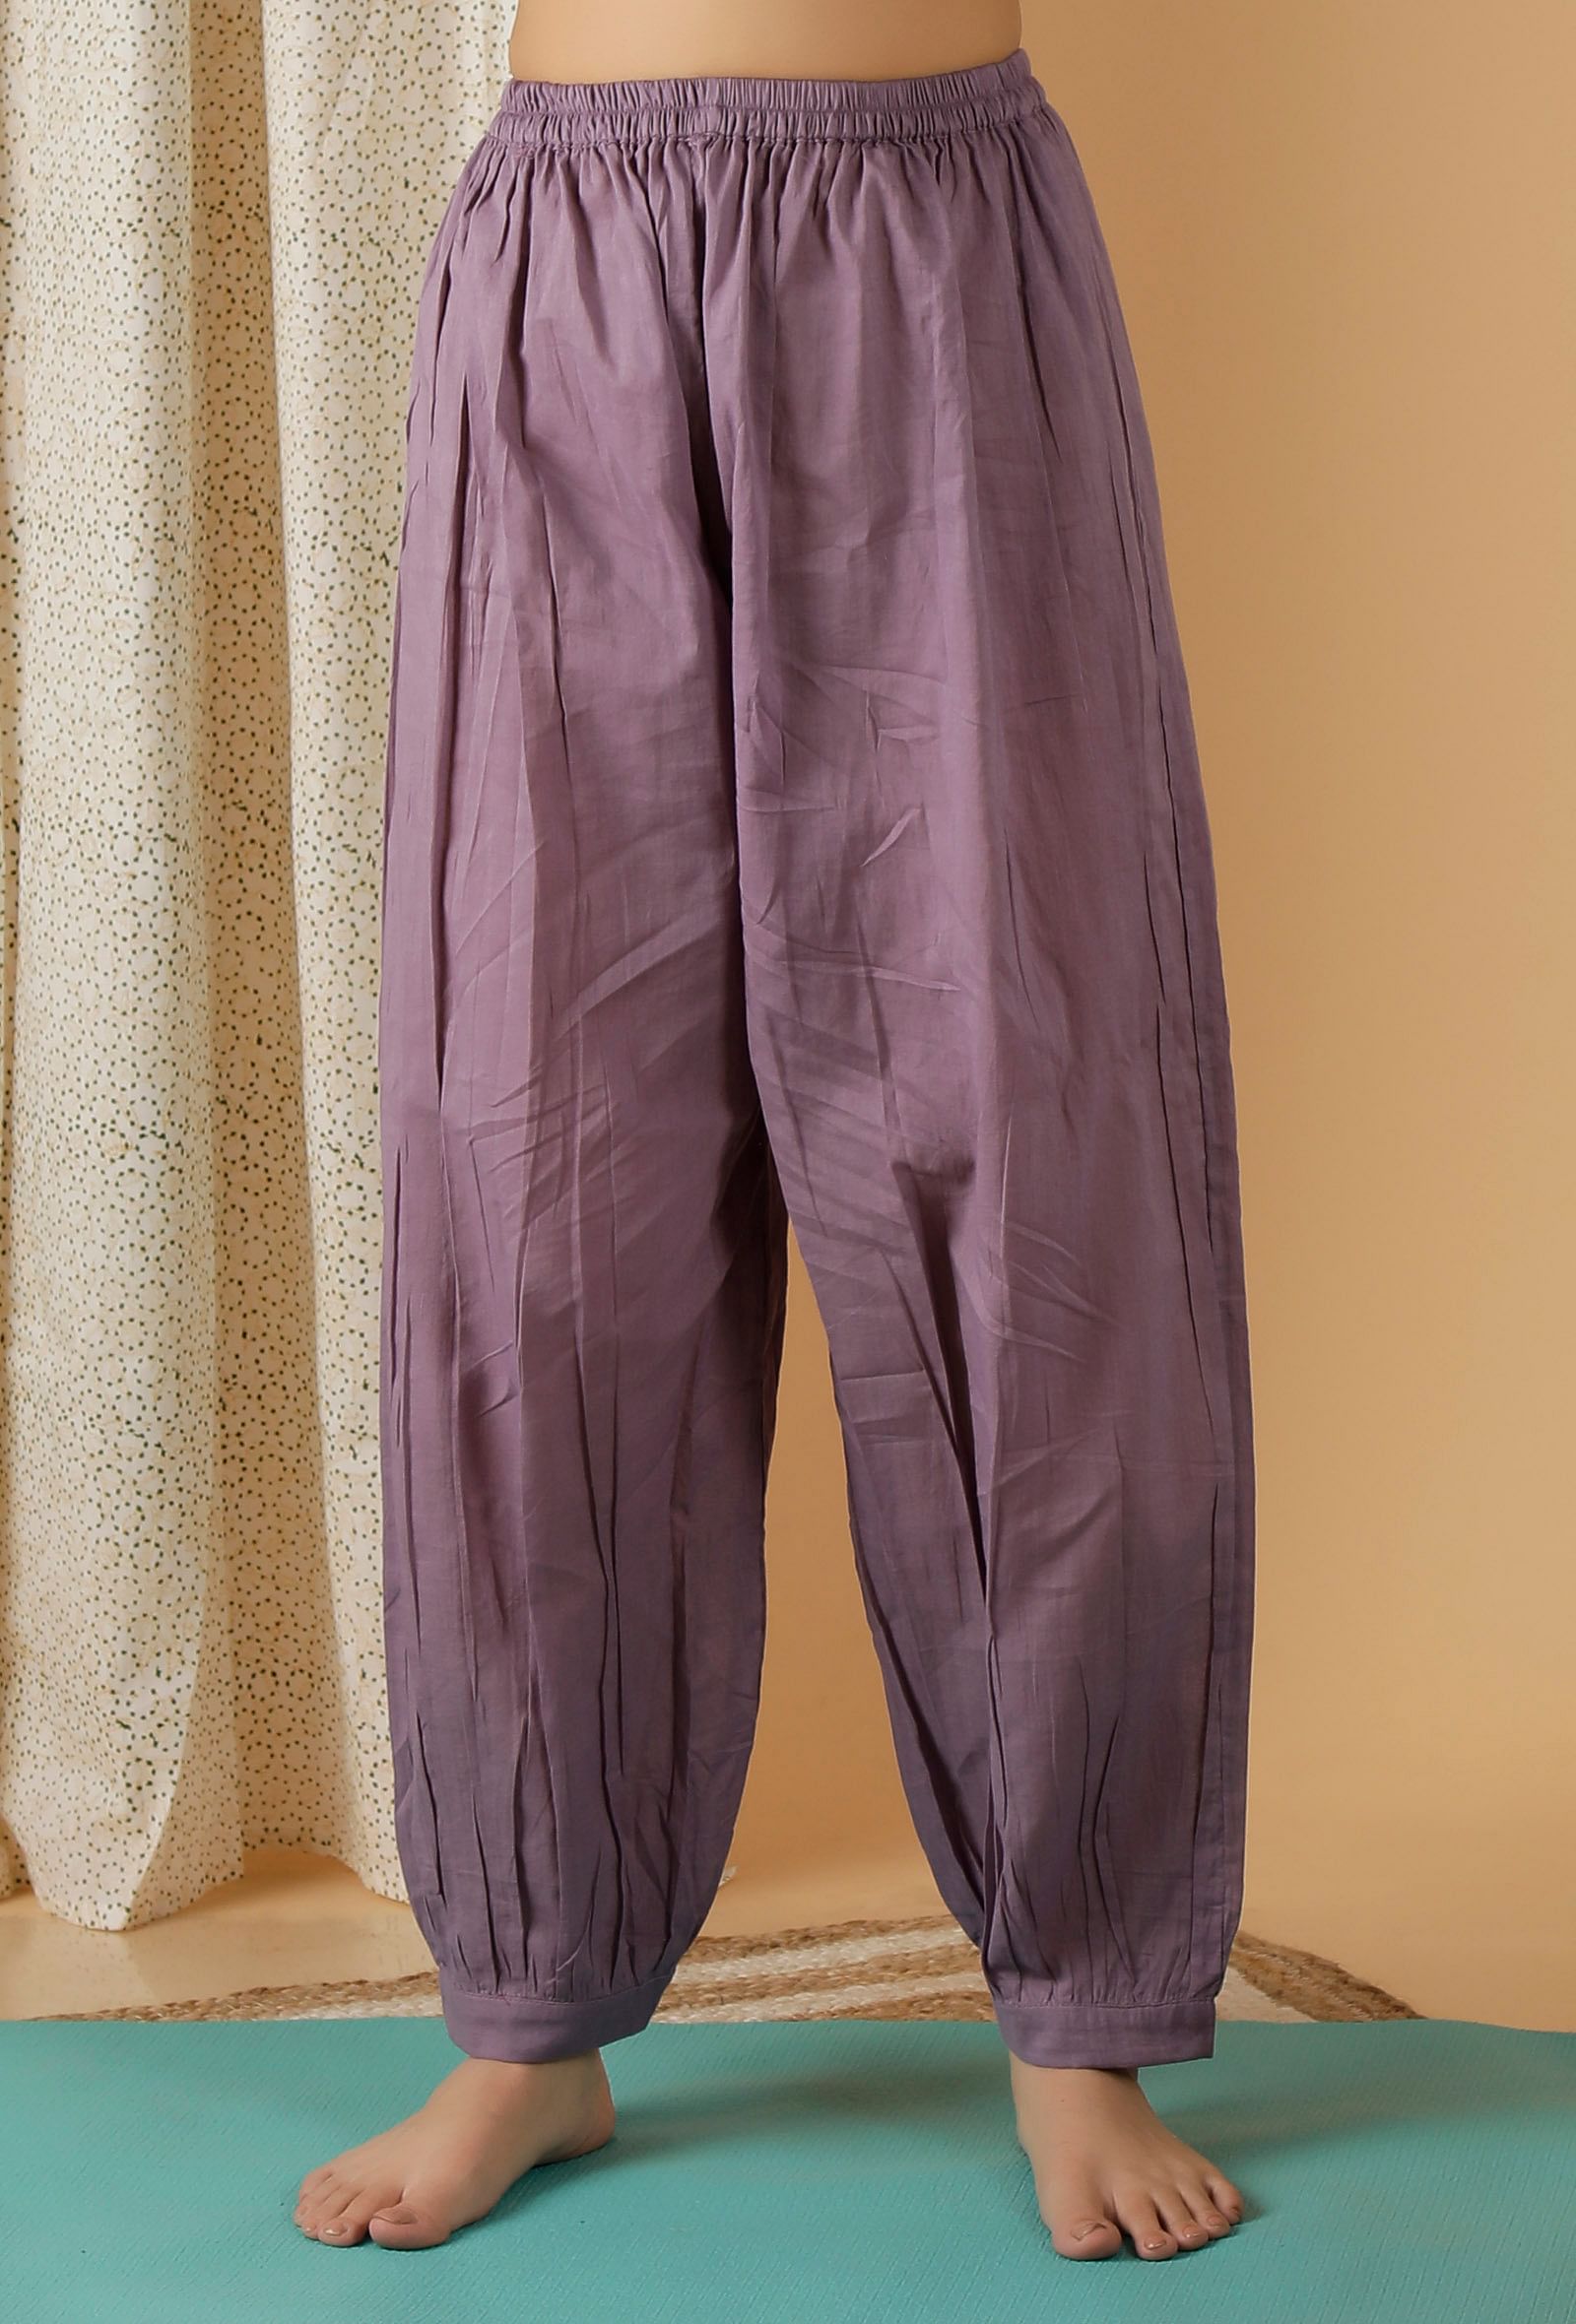 Buy Thai Cotton Harem Pants for Women, Boho Clothing, Baggy Trouser, Maxi  Lounge Pants, Aladdin Pants, Stonewashed Cotton Trouser, PT001 Online in  India - Etsy